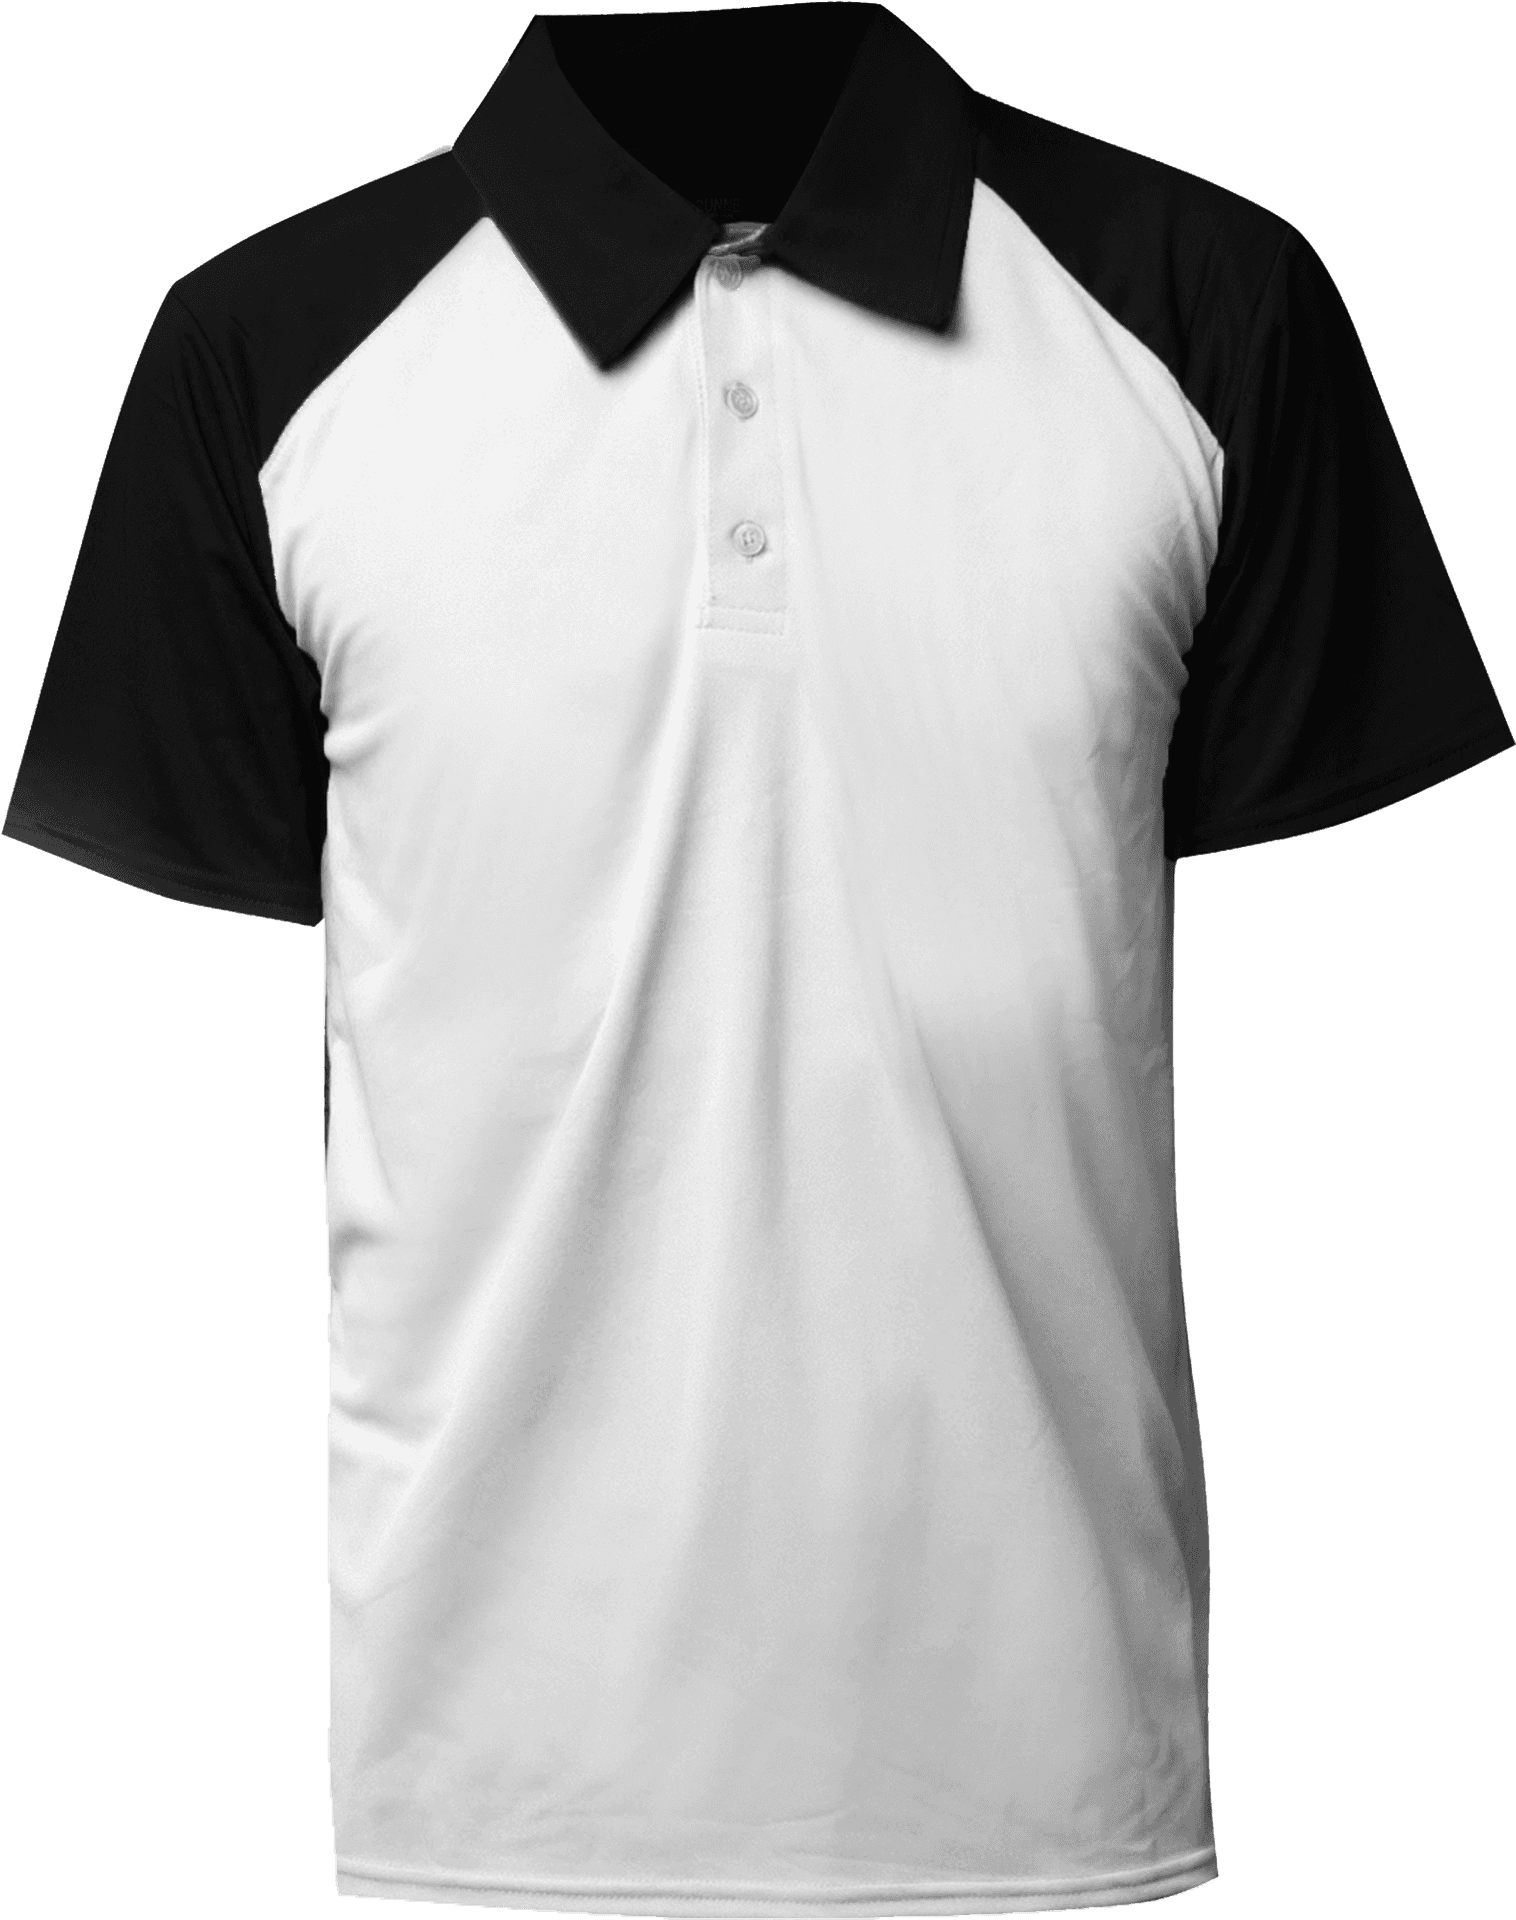 Black White Polo Shirt Design PNG image